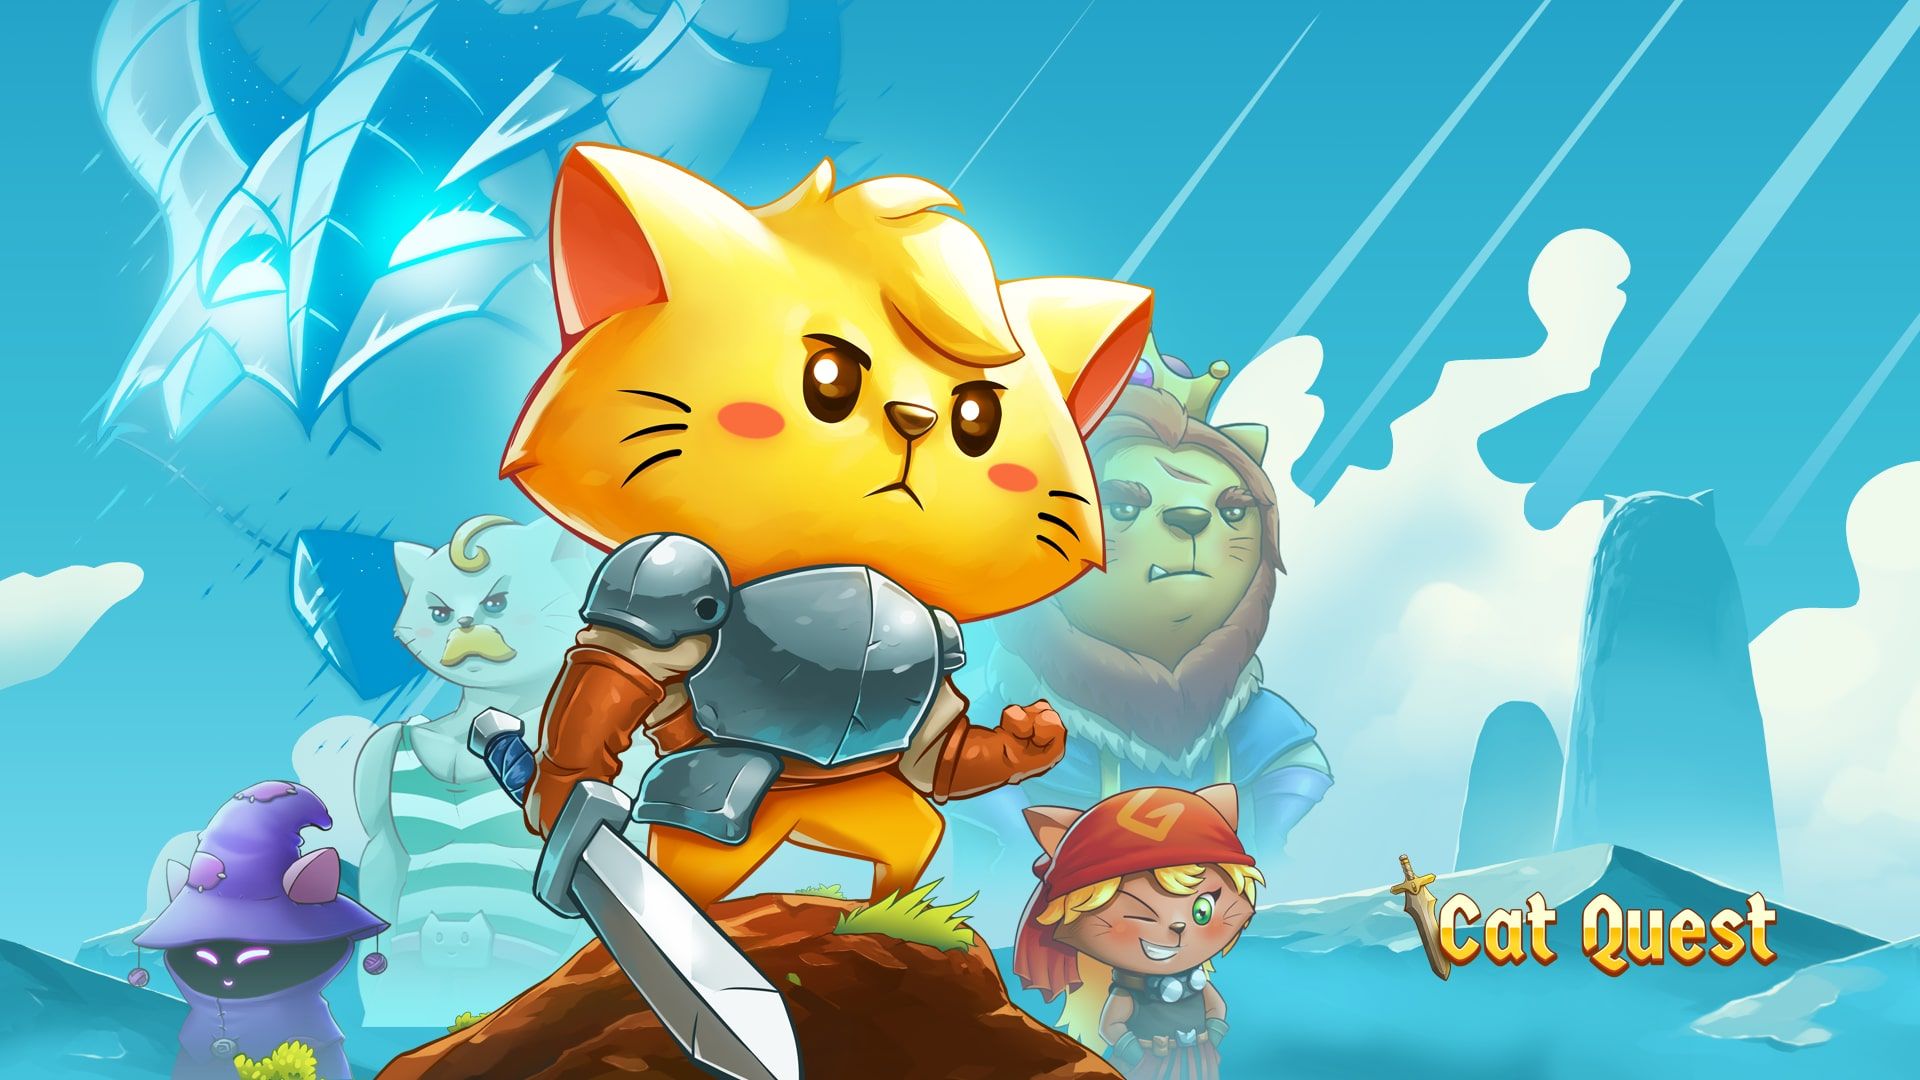 Cat Quest cover image